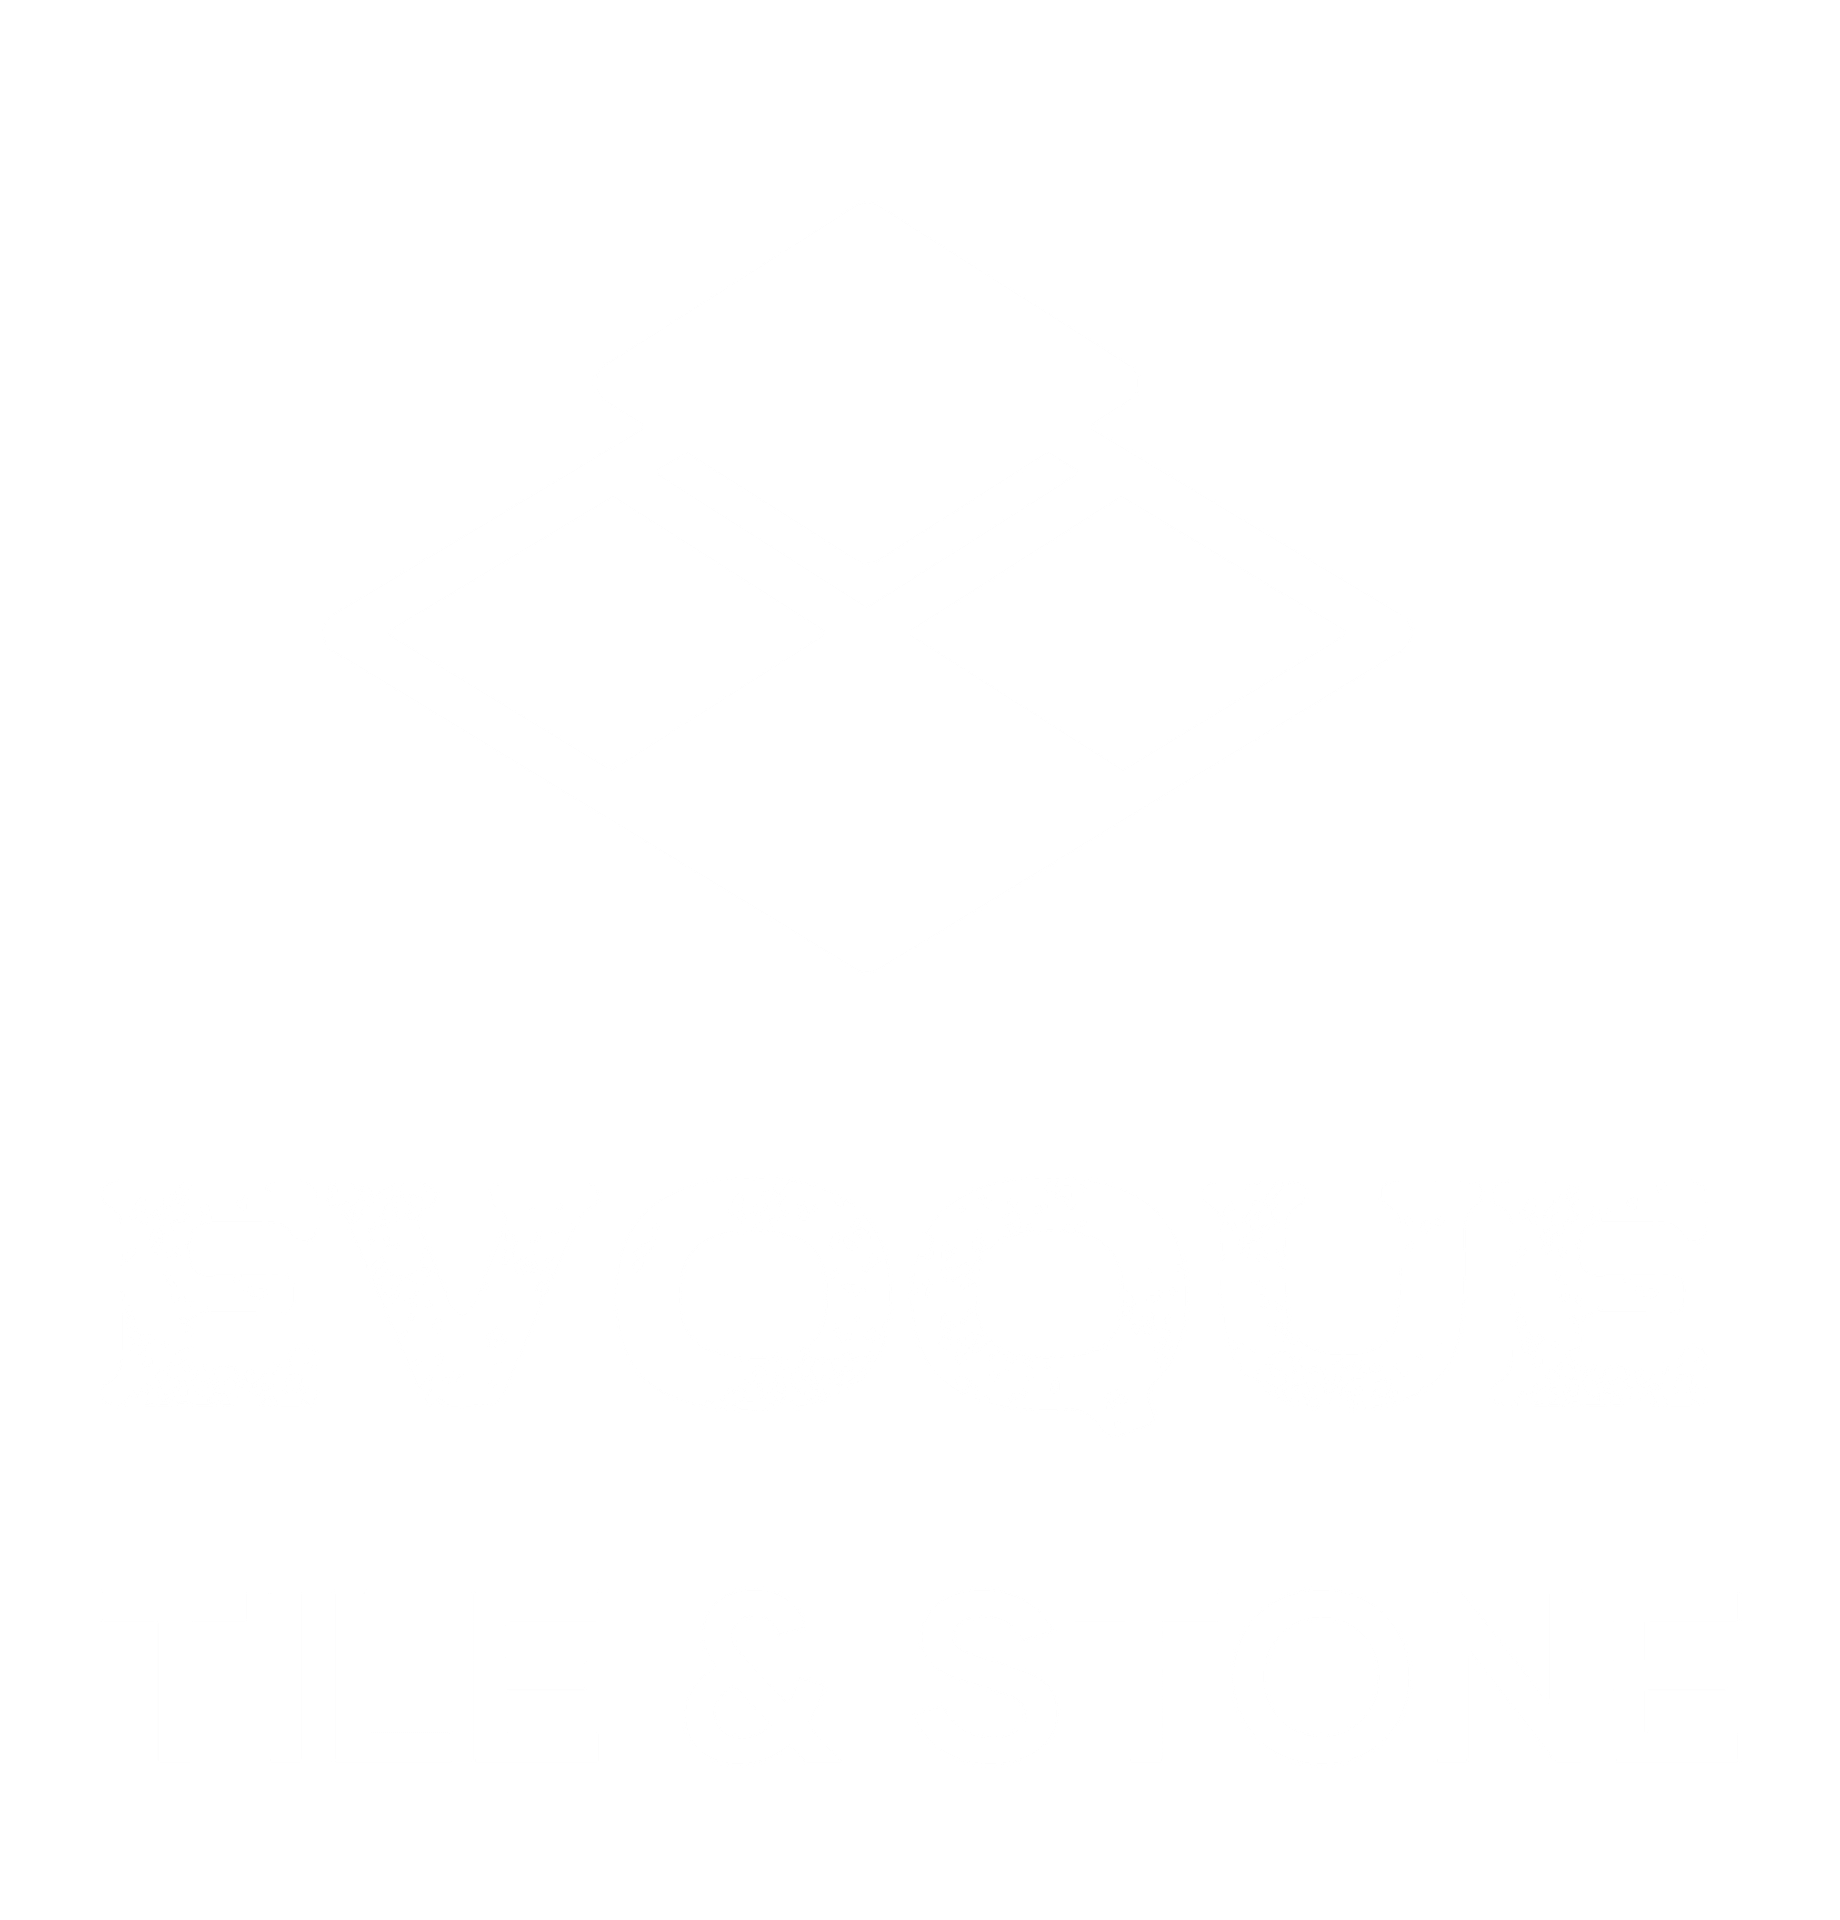 Evoque Tile & Stone